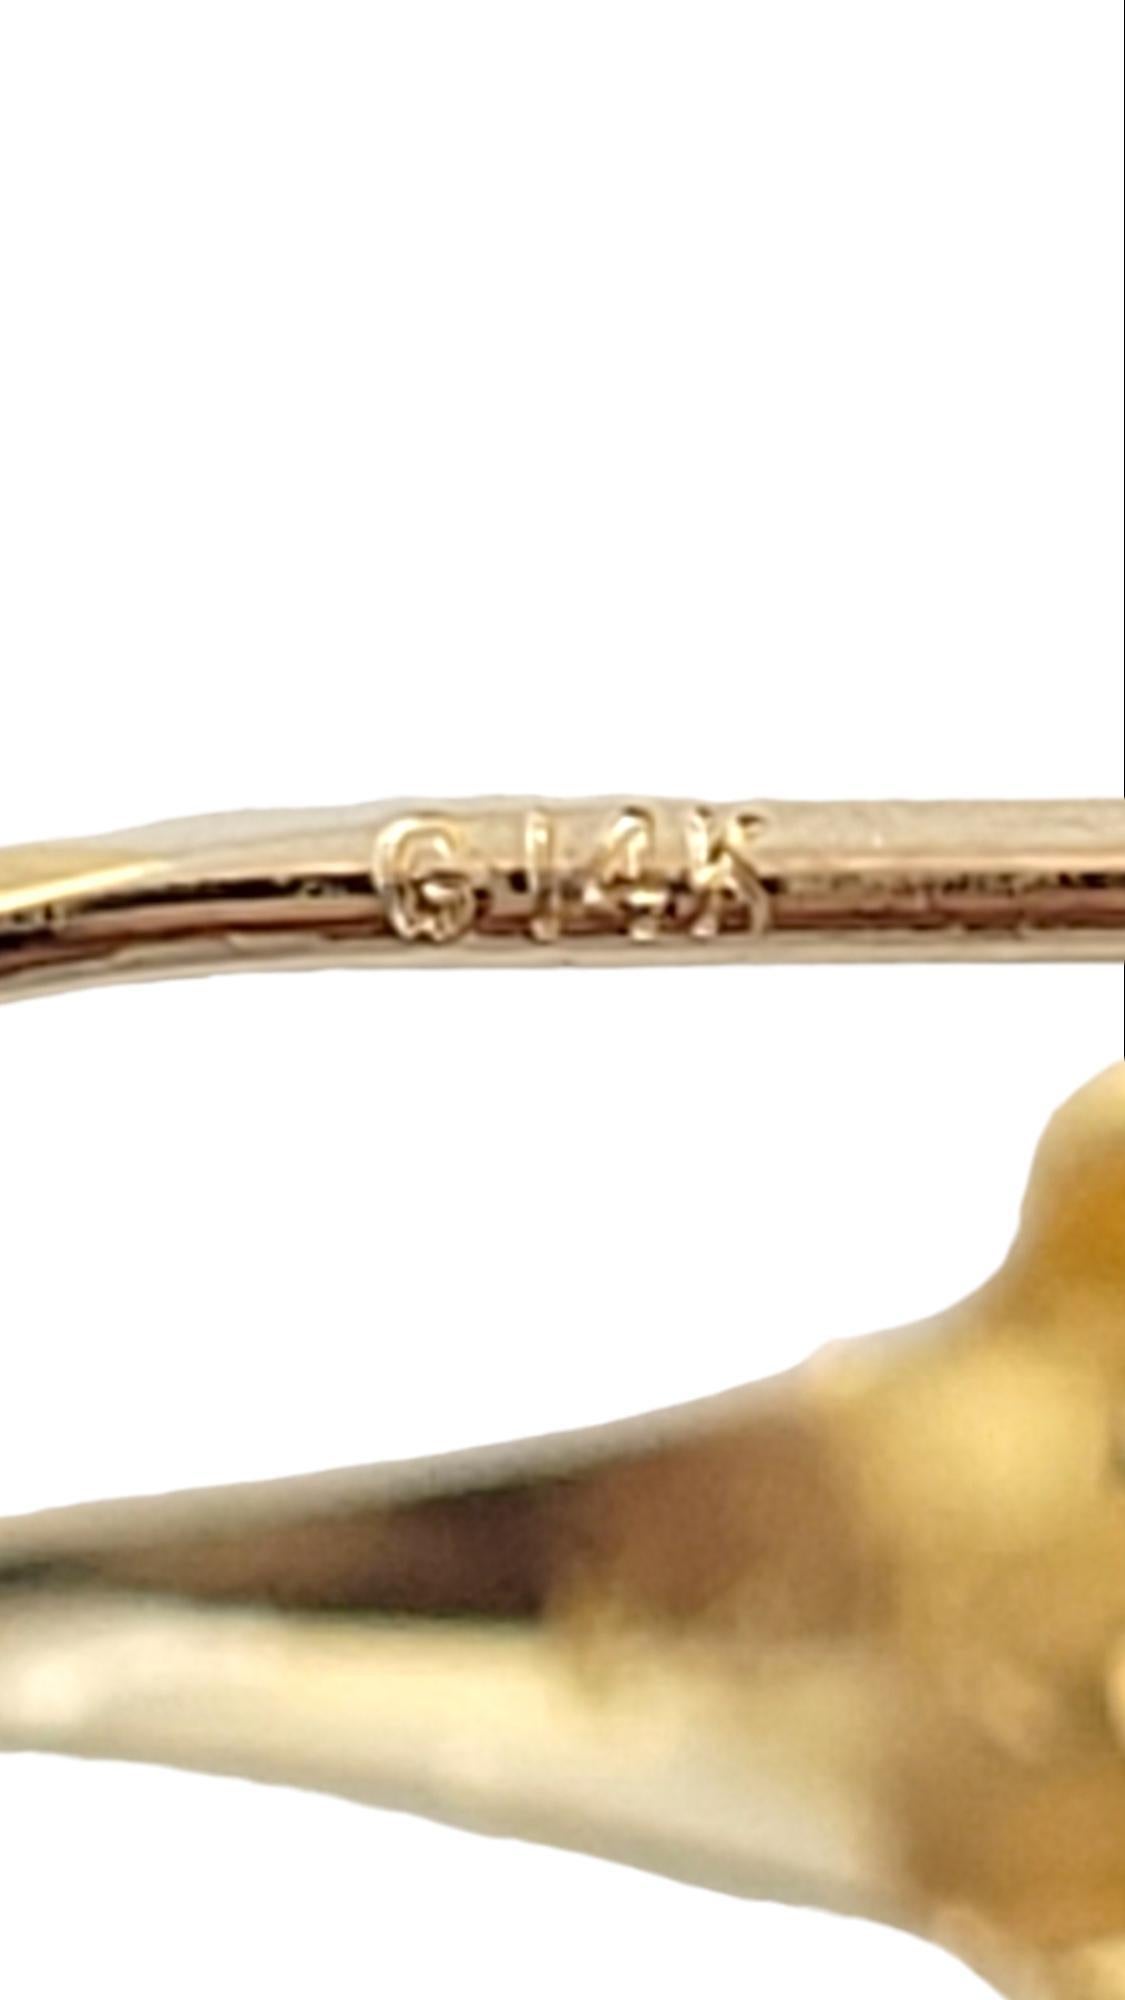 14K Yellow Gold X Stud Earrings w/ Lever Backs #15888 For Sale 1